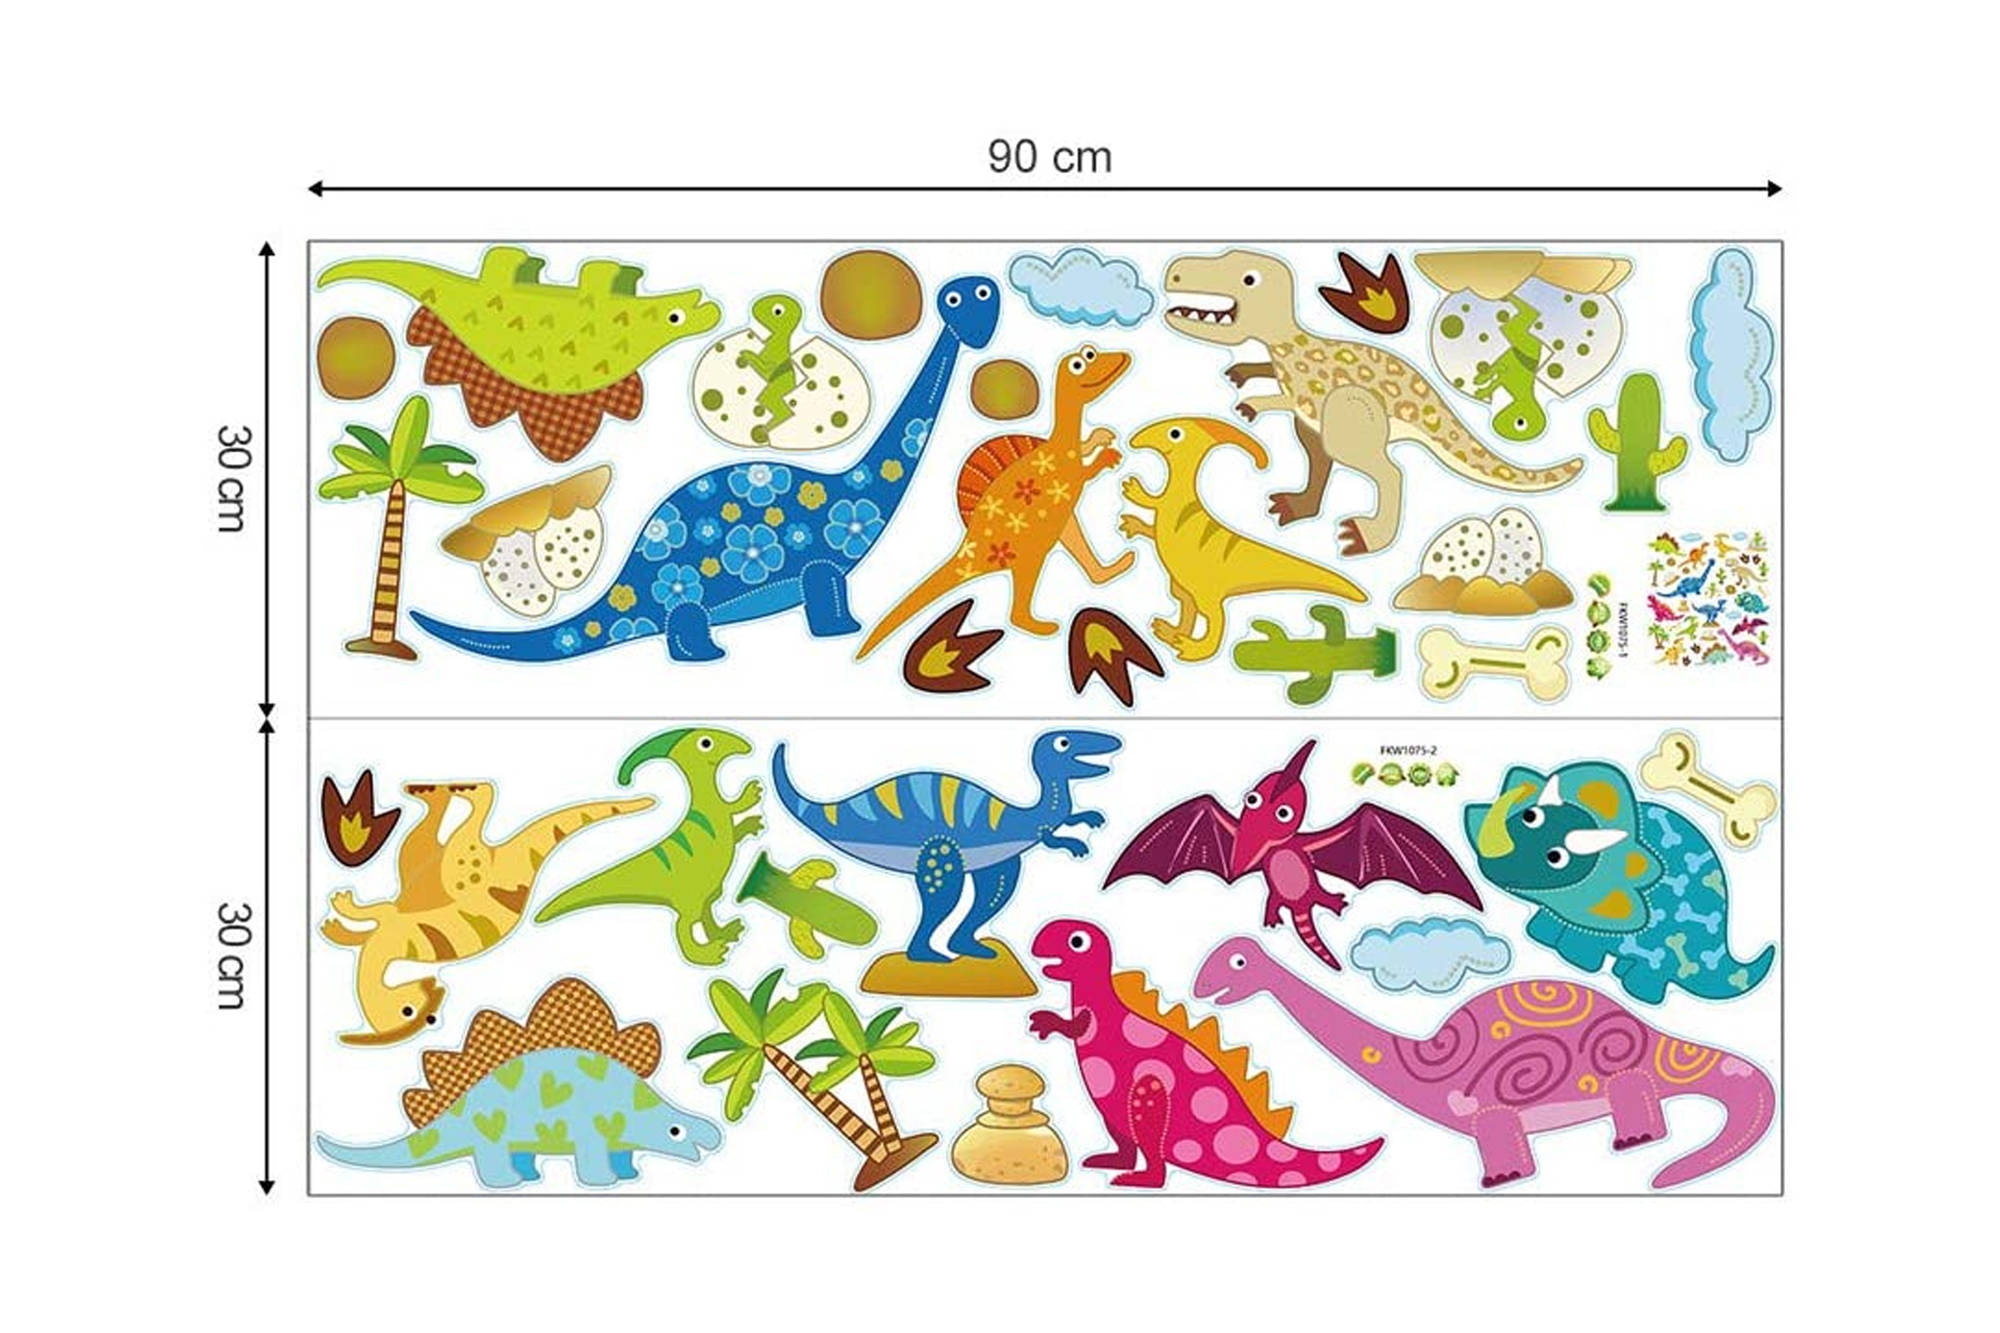 Ufengke Wall Stickers Dinosaurs